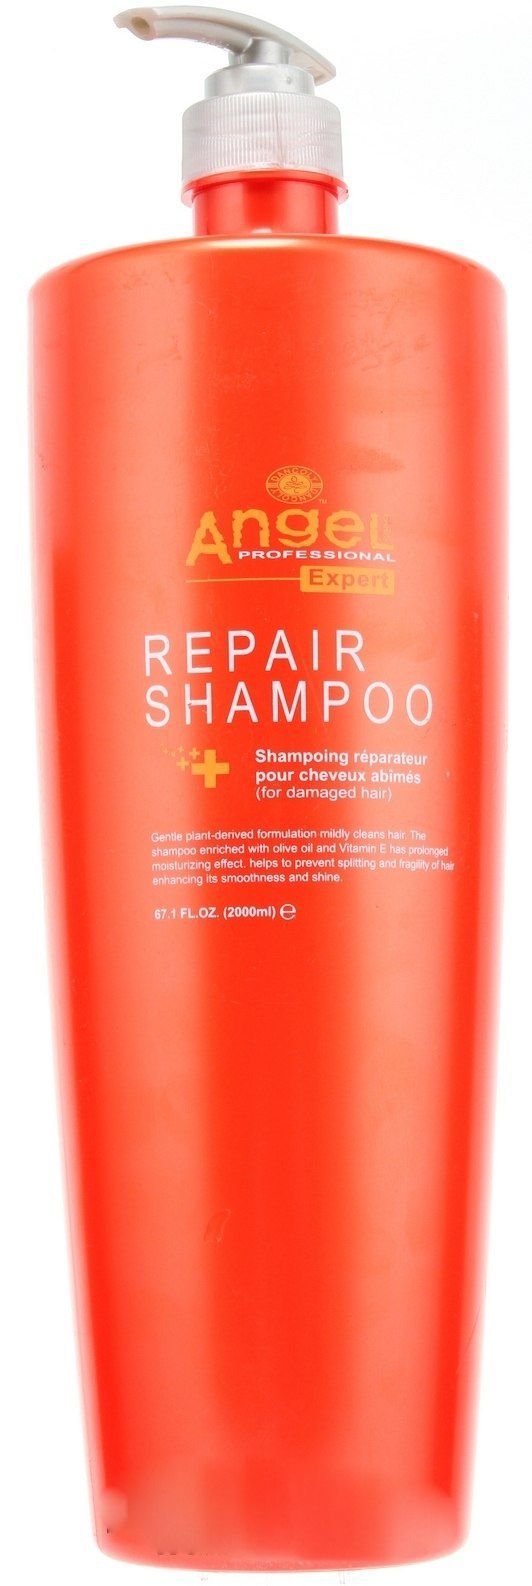 Angel Expert Repair Shampoo 46258